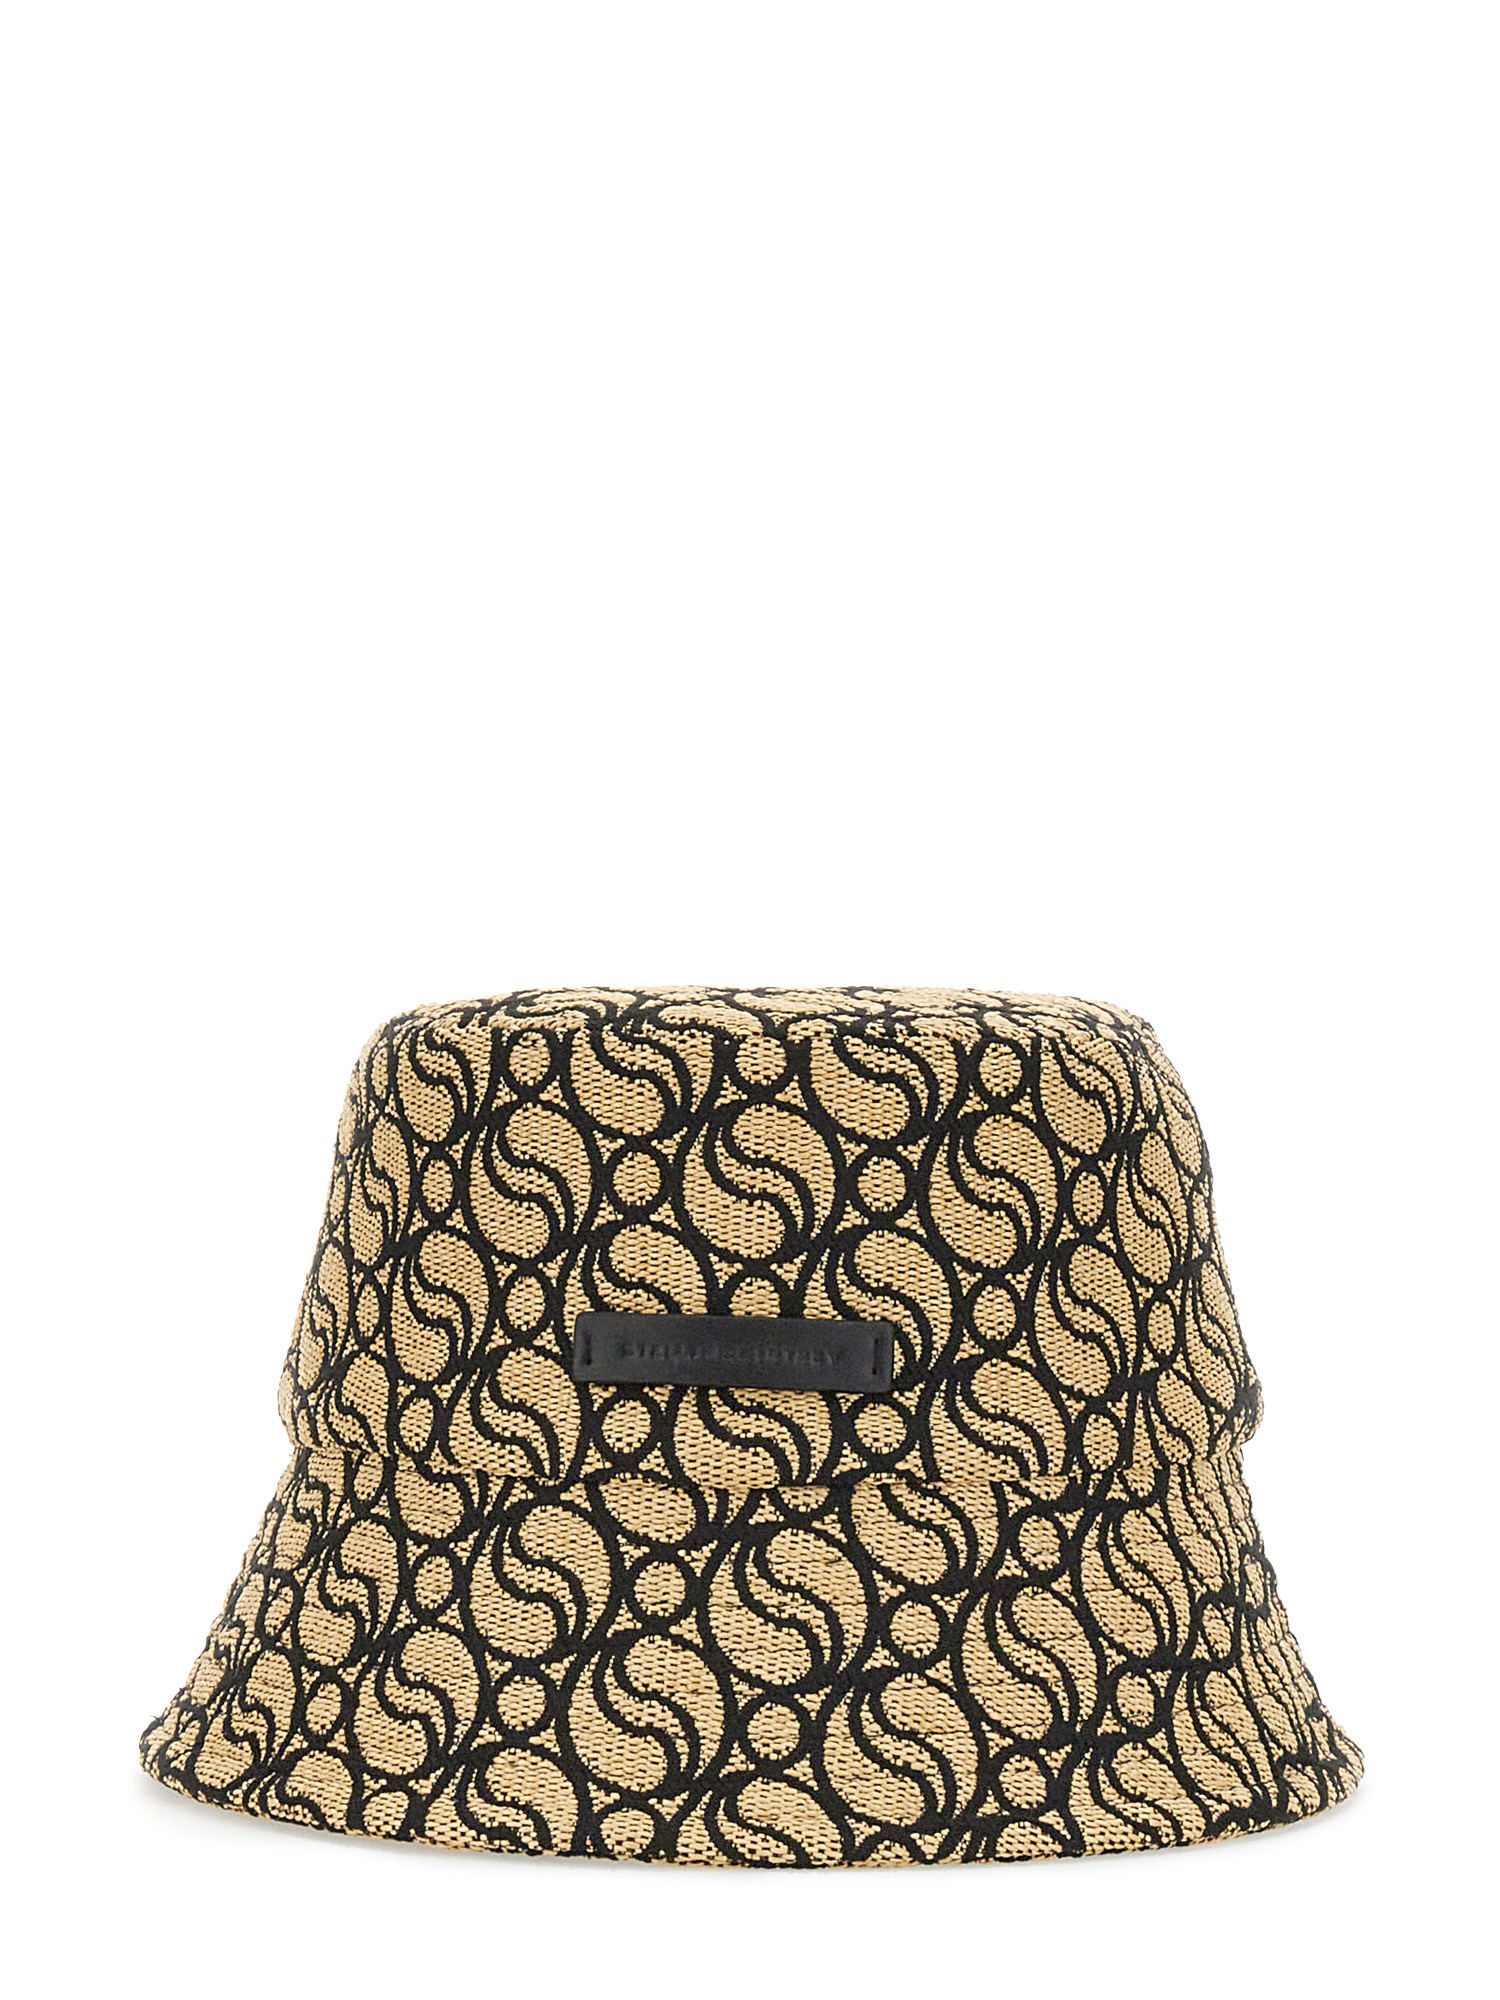 stella mccartney bucket hat with logo